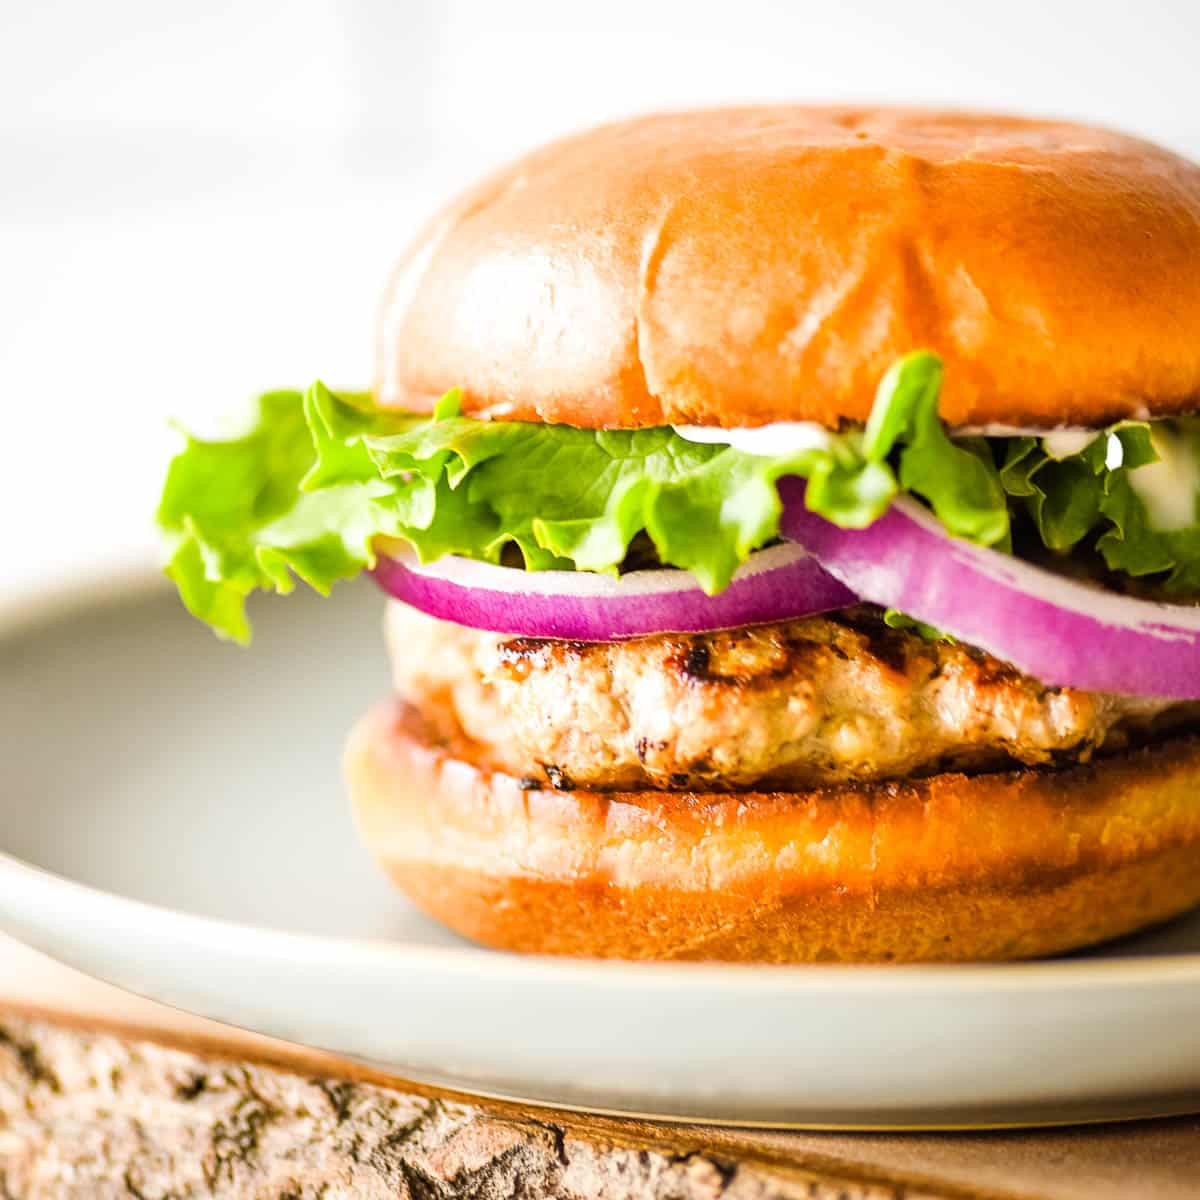 A closeup side view is shown of an air fryer turkey burger on a light blue plate.